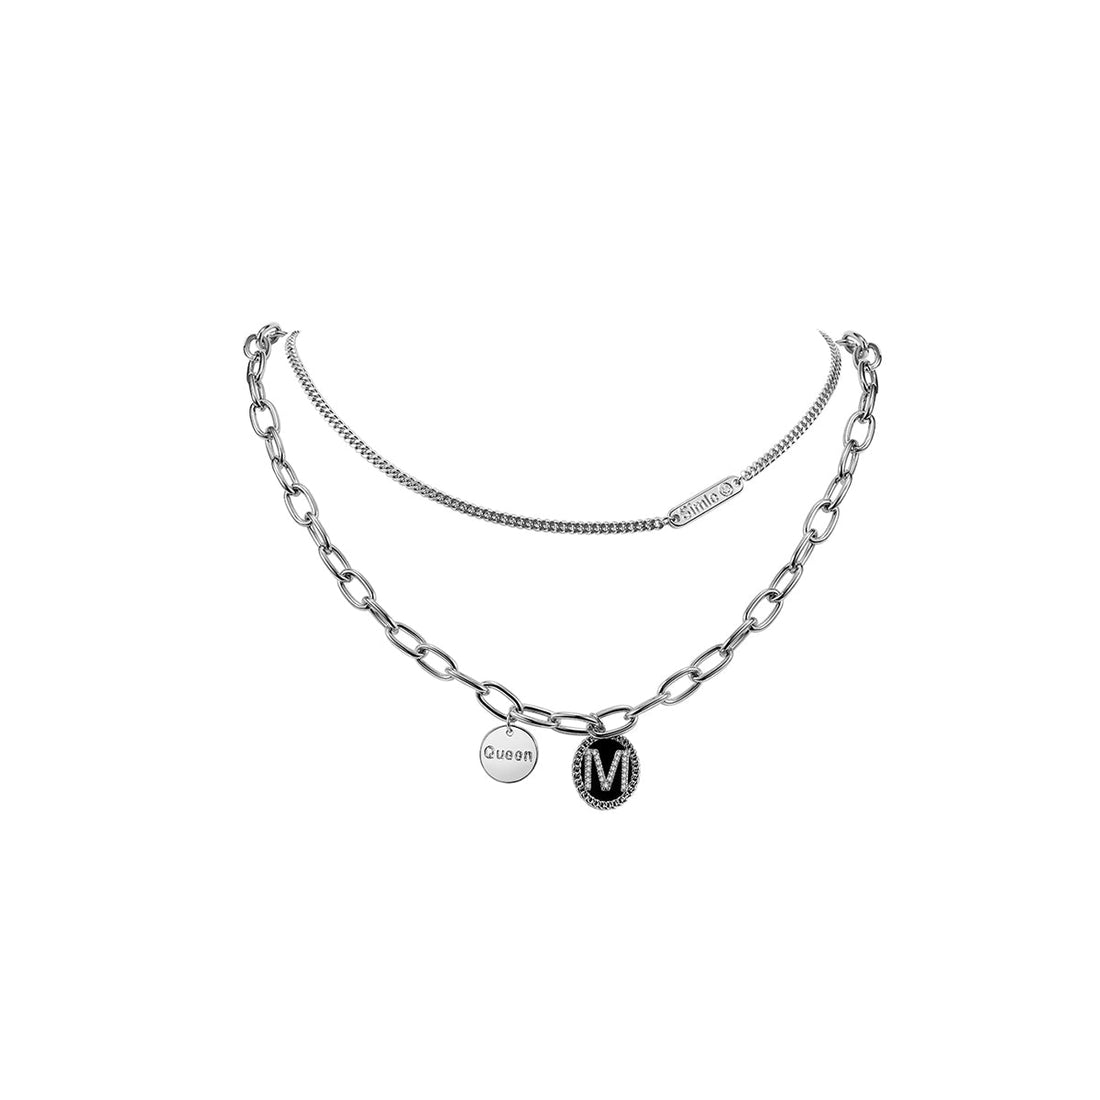 Queen M Silver Necklace - 0cm